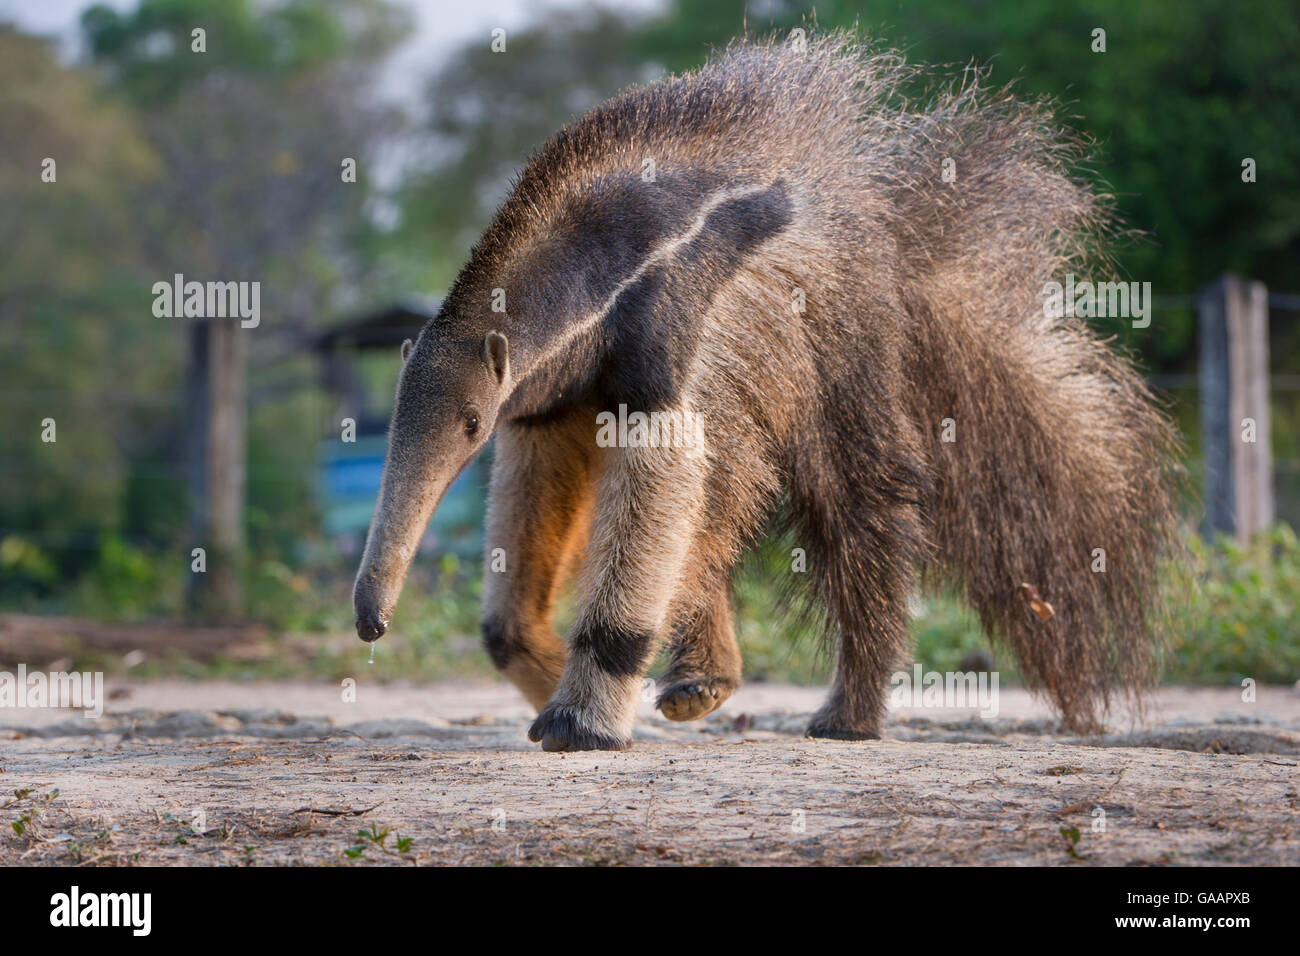 Giant Anteater Hug Pose Stock Photo 1122199472